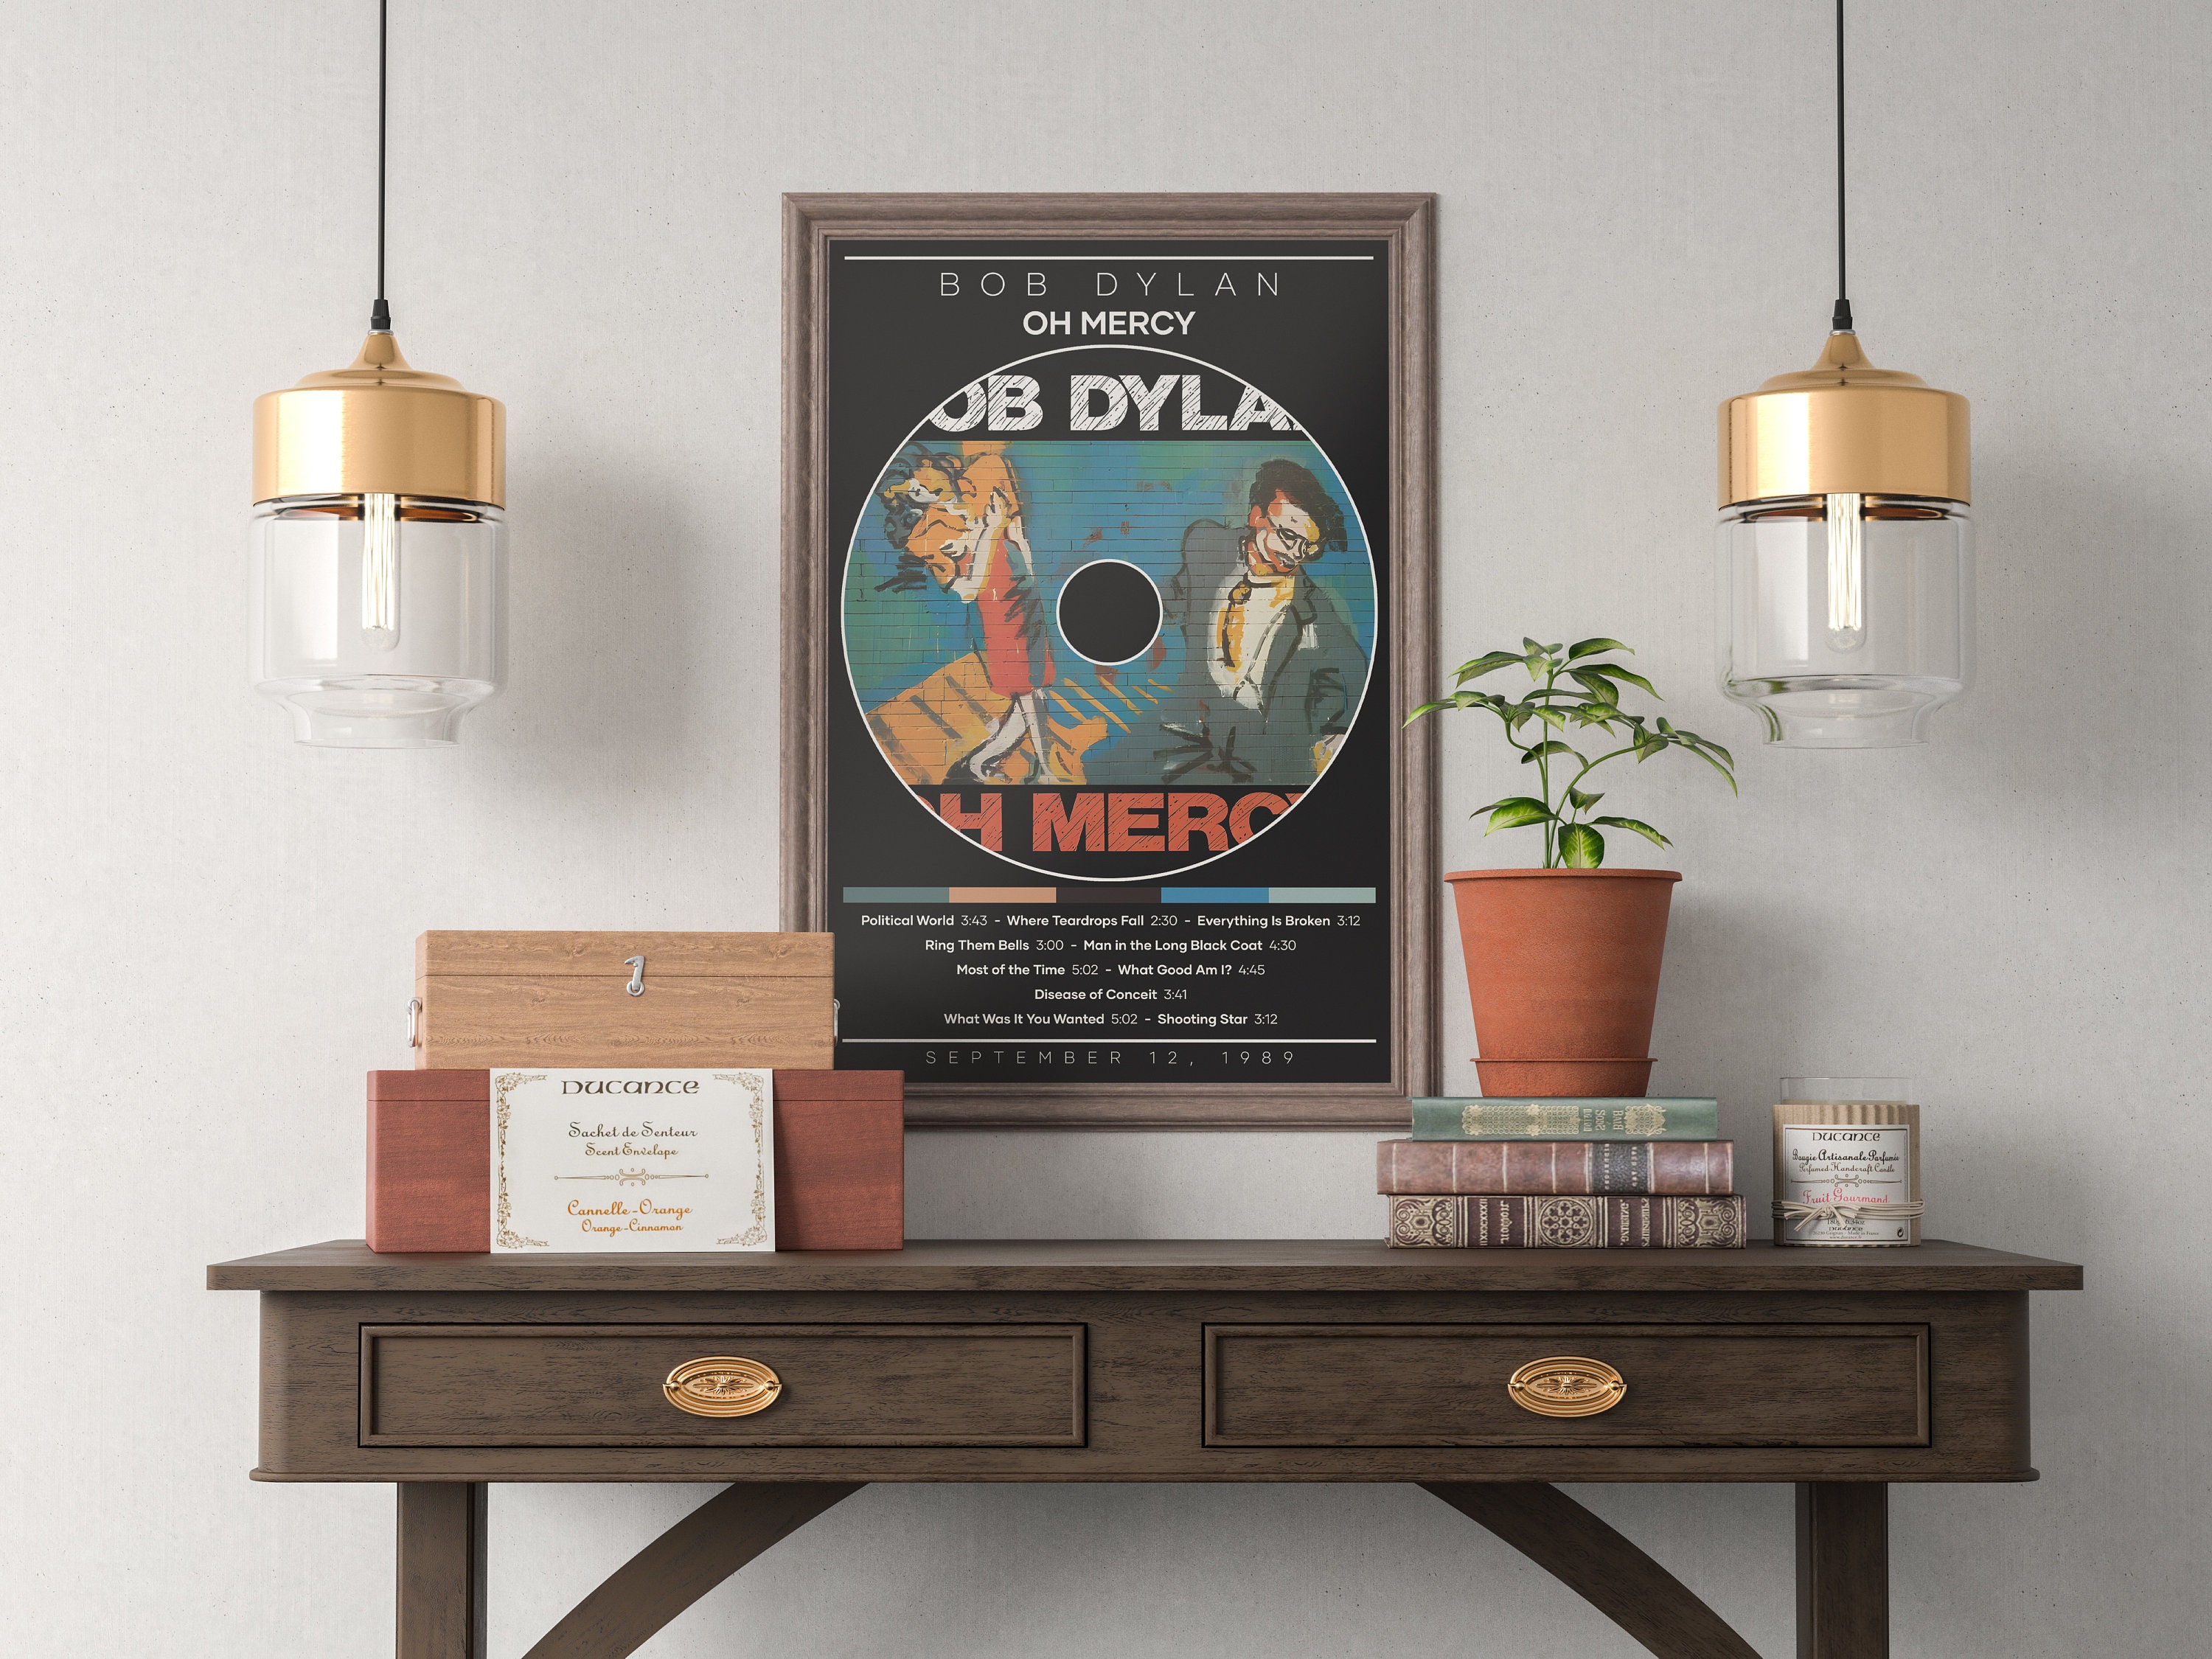 Bob Dylan Poster Print | Oh Merch Poster | Rock Music Poster